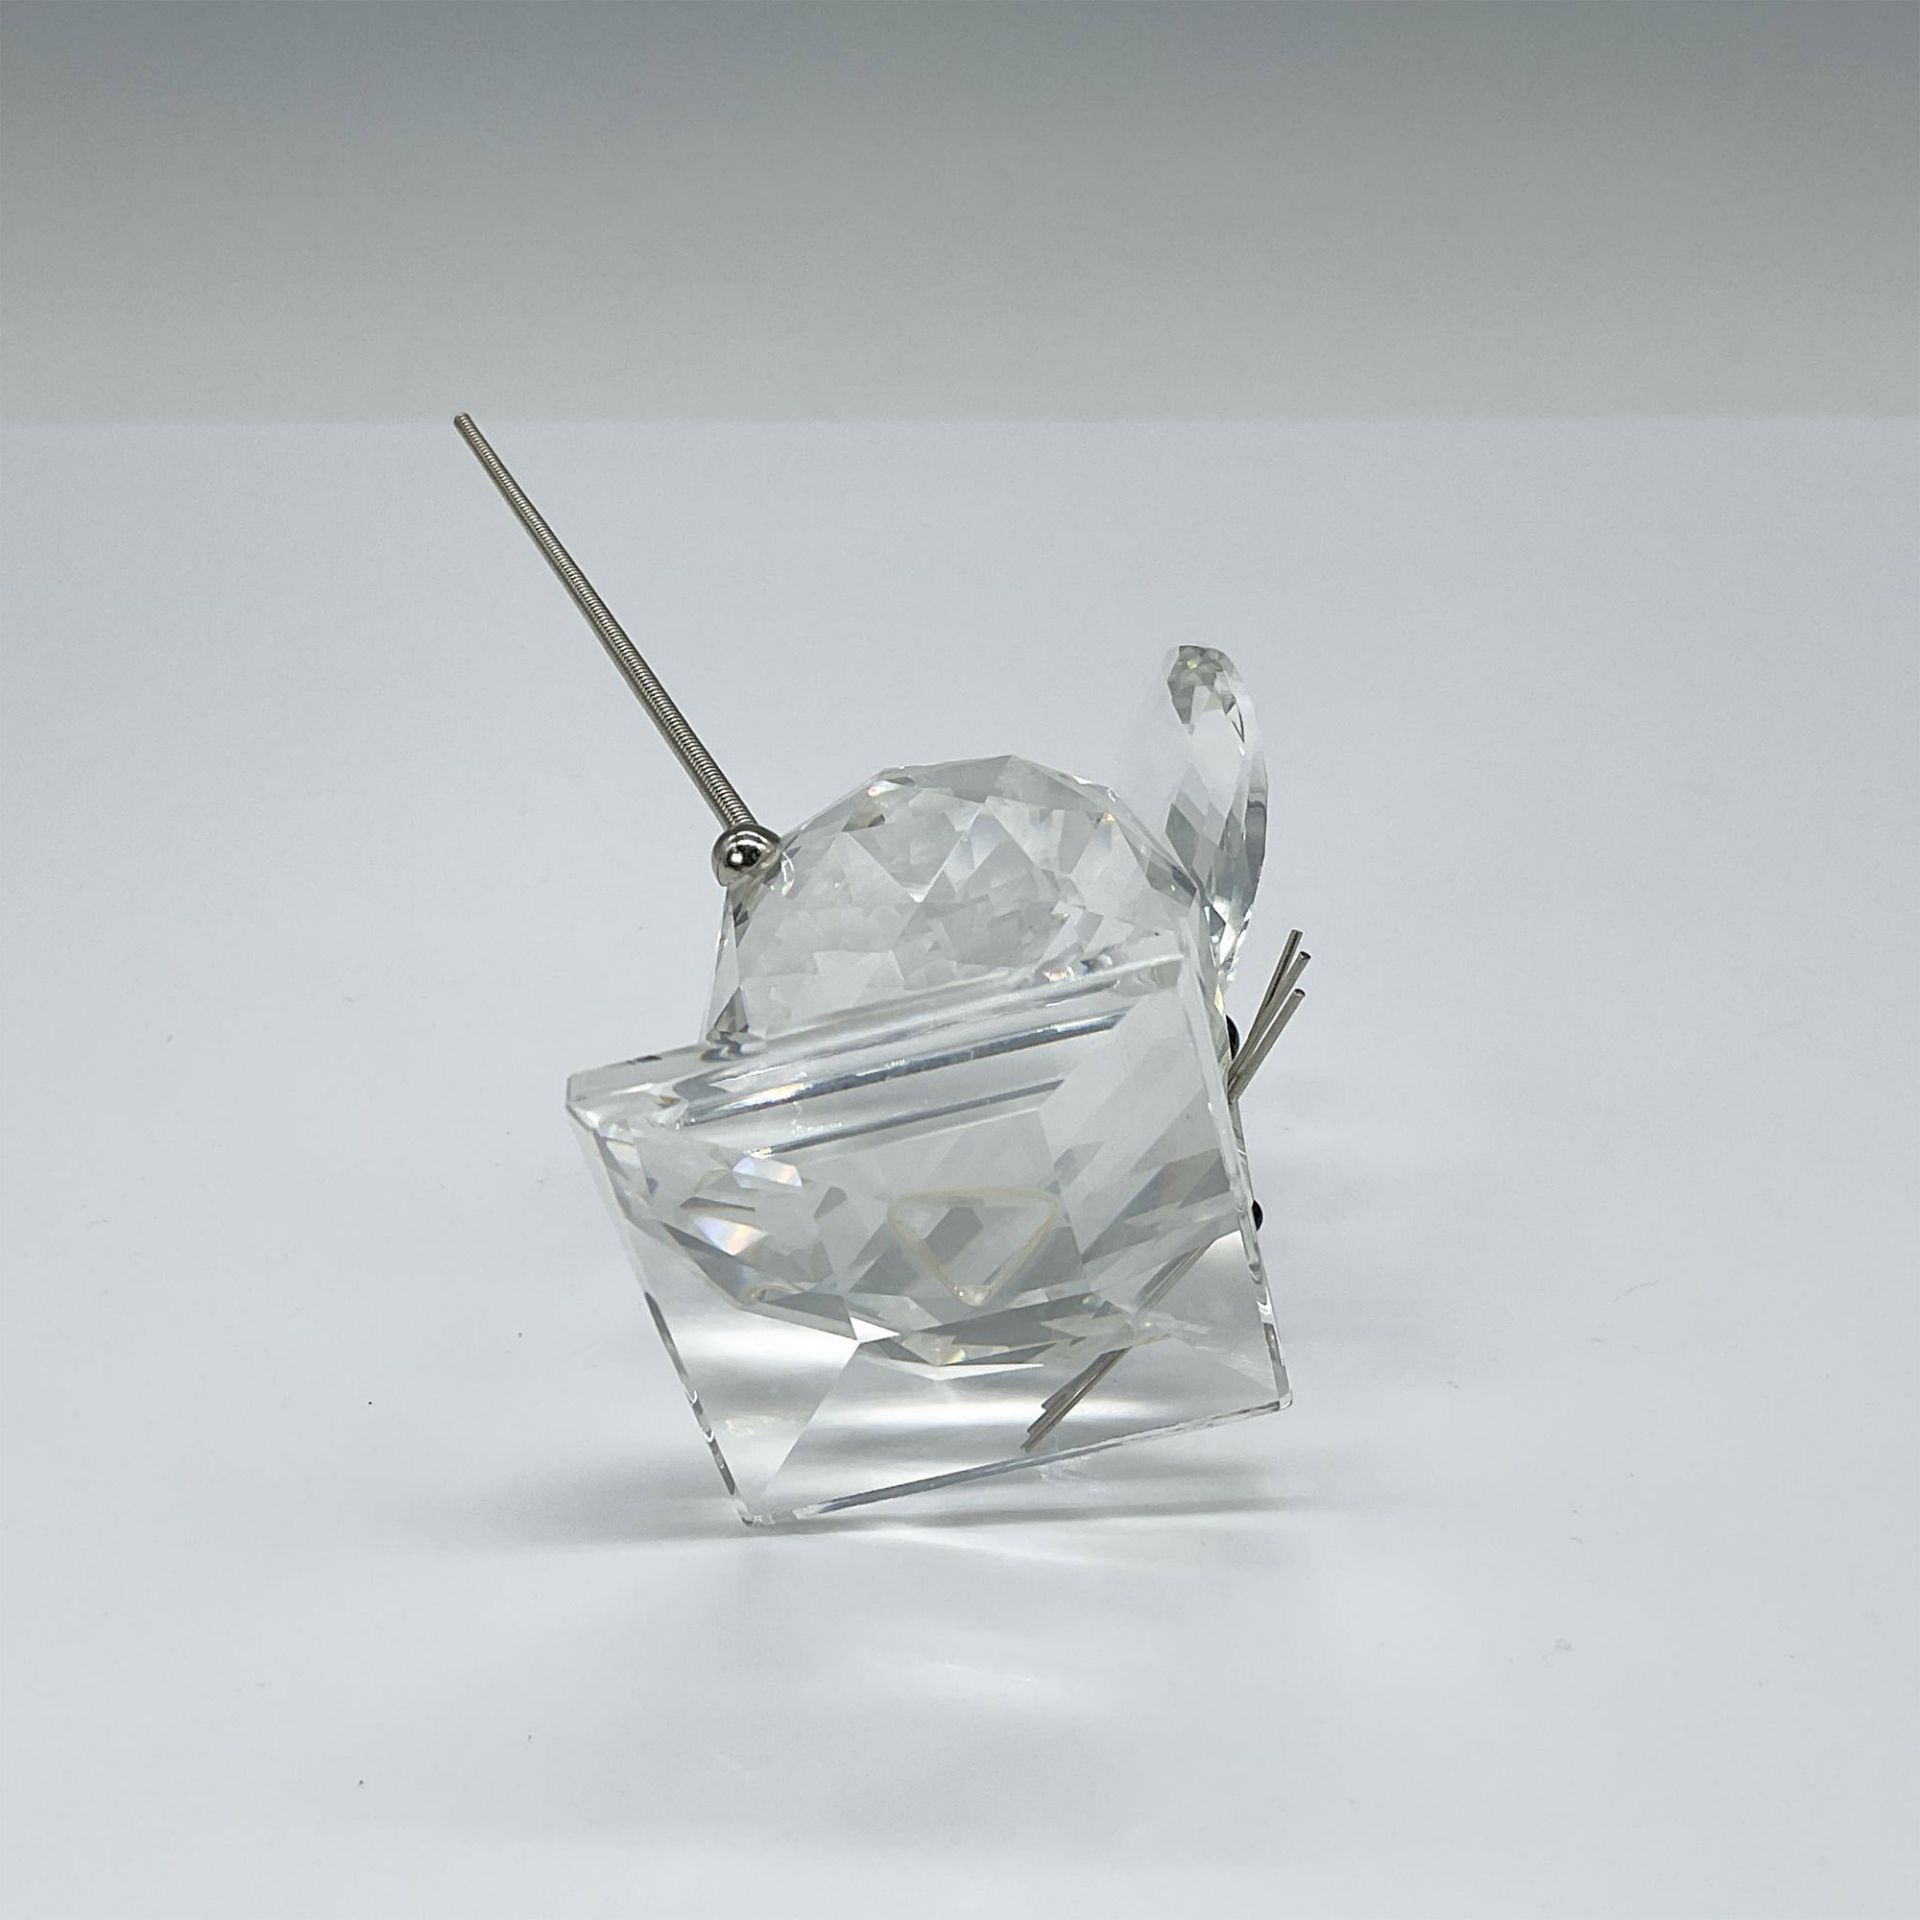 Swarovski Crystal Figurine, Mouse King - Image 3 of 3